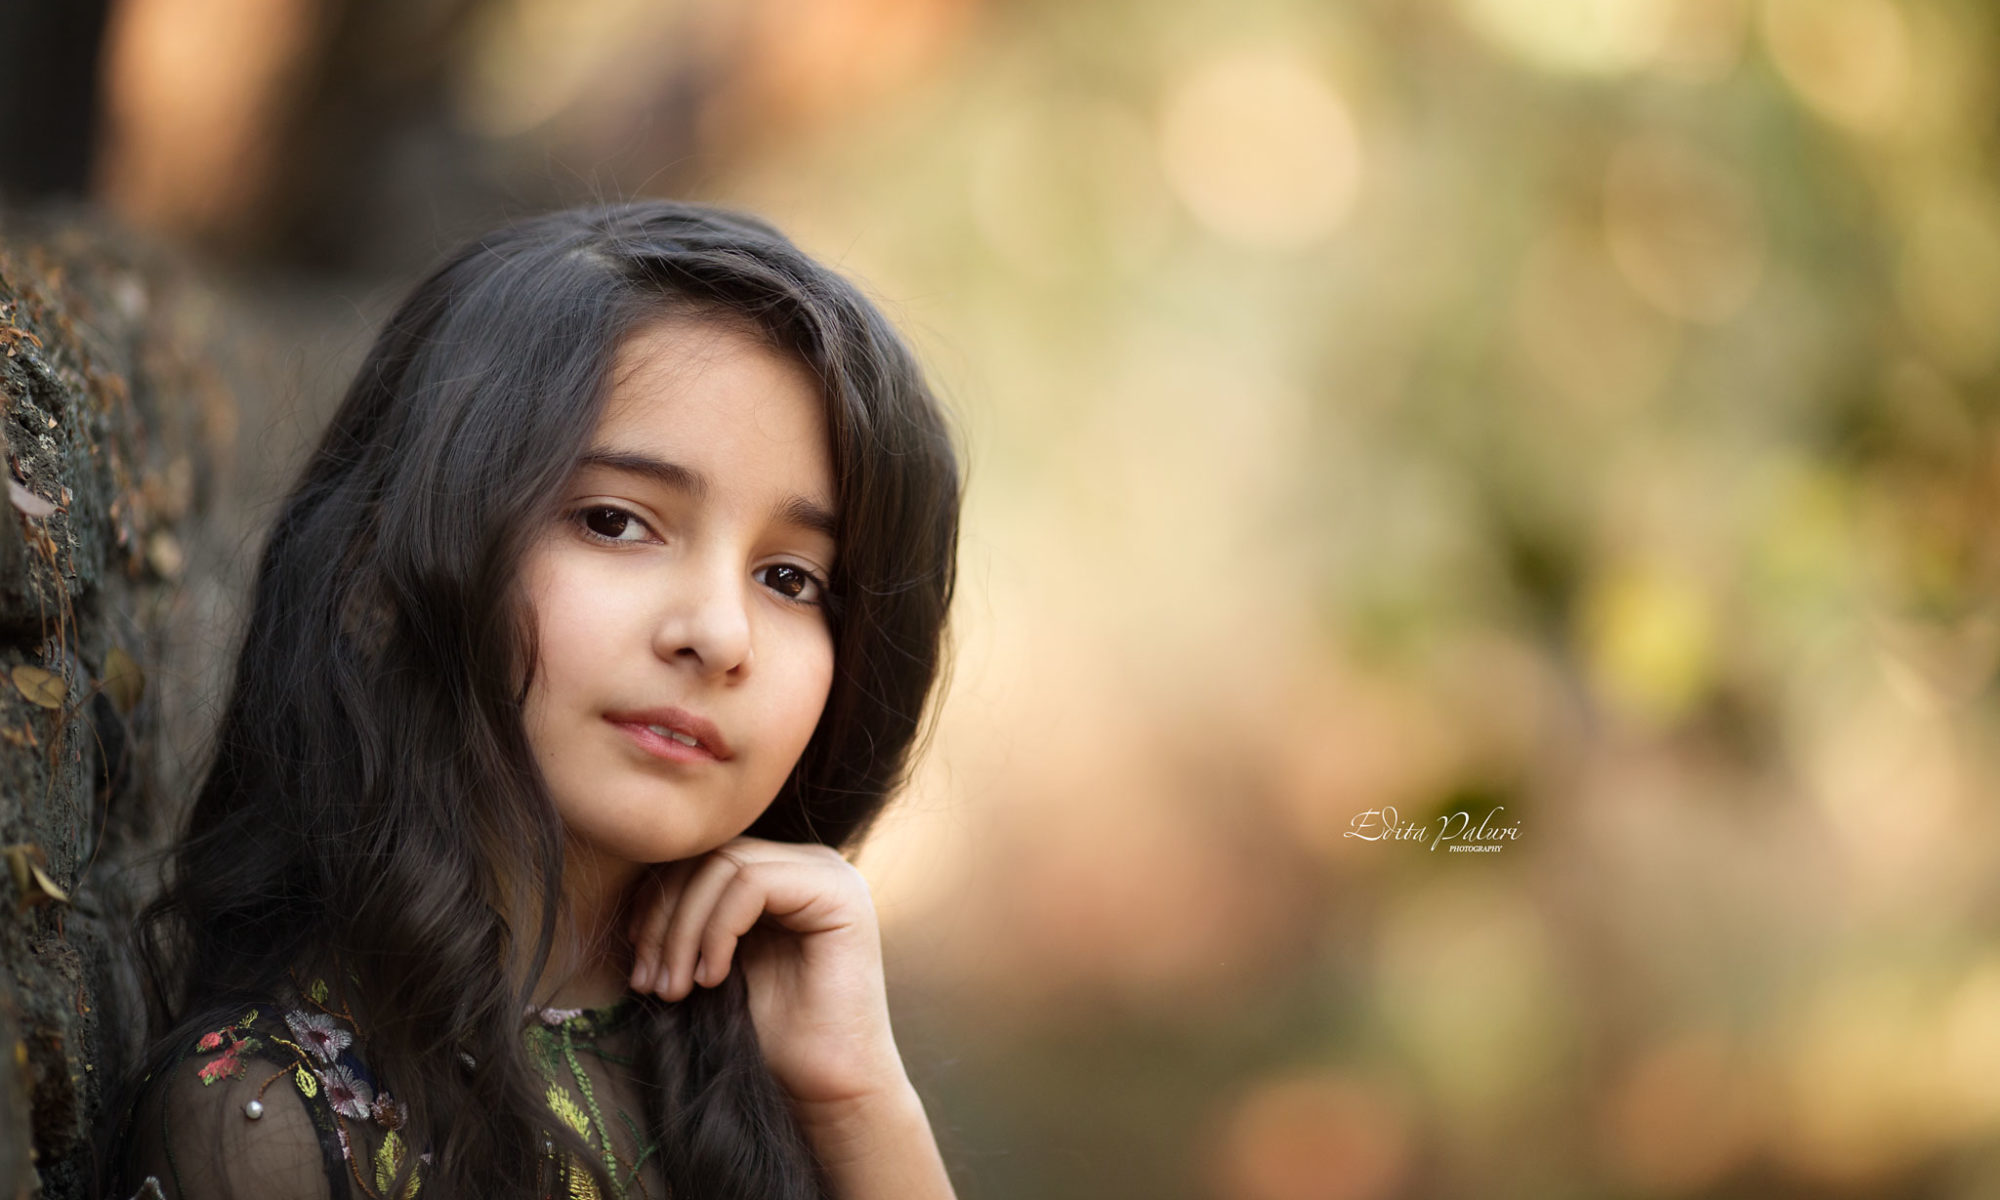 9 year old girl pre-birthday photo shoot, Edita photography